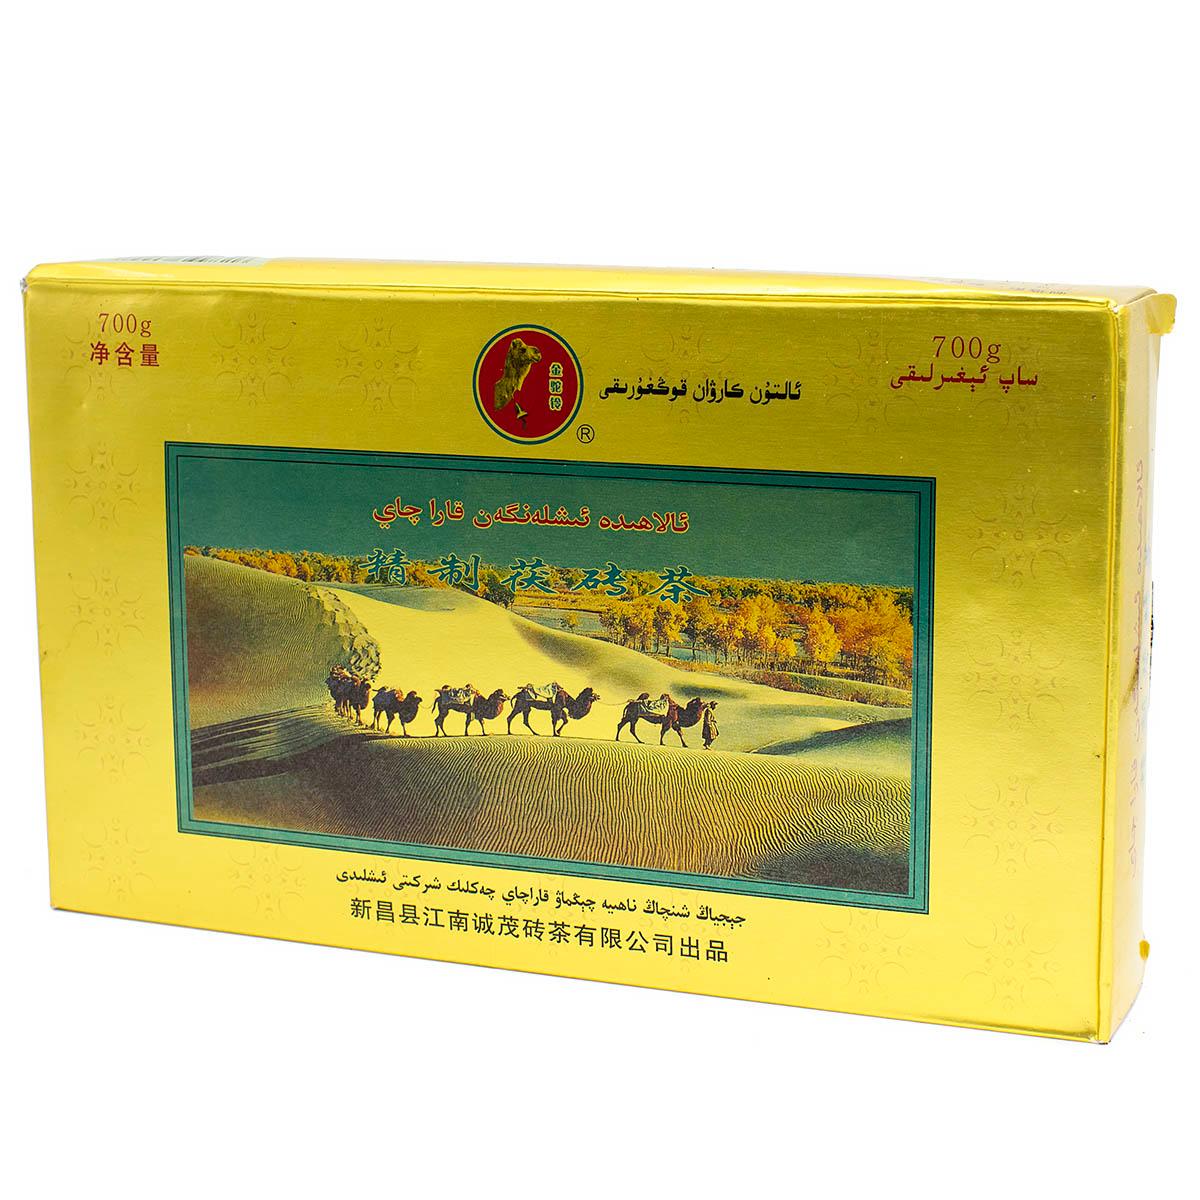 Черный чай Цзин Чжи Фу Чжуань Ча Золотой Верблюд, кирпич, 2016, 700 г